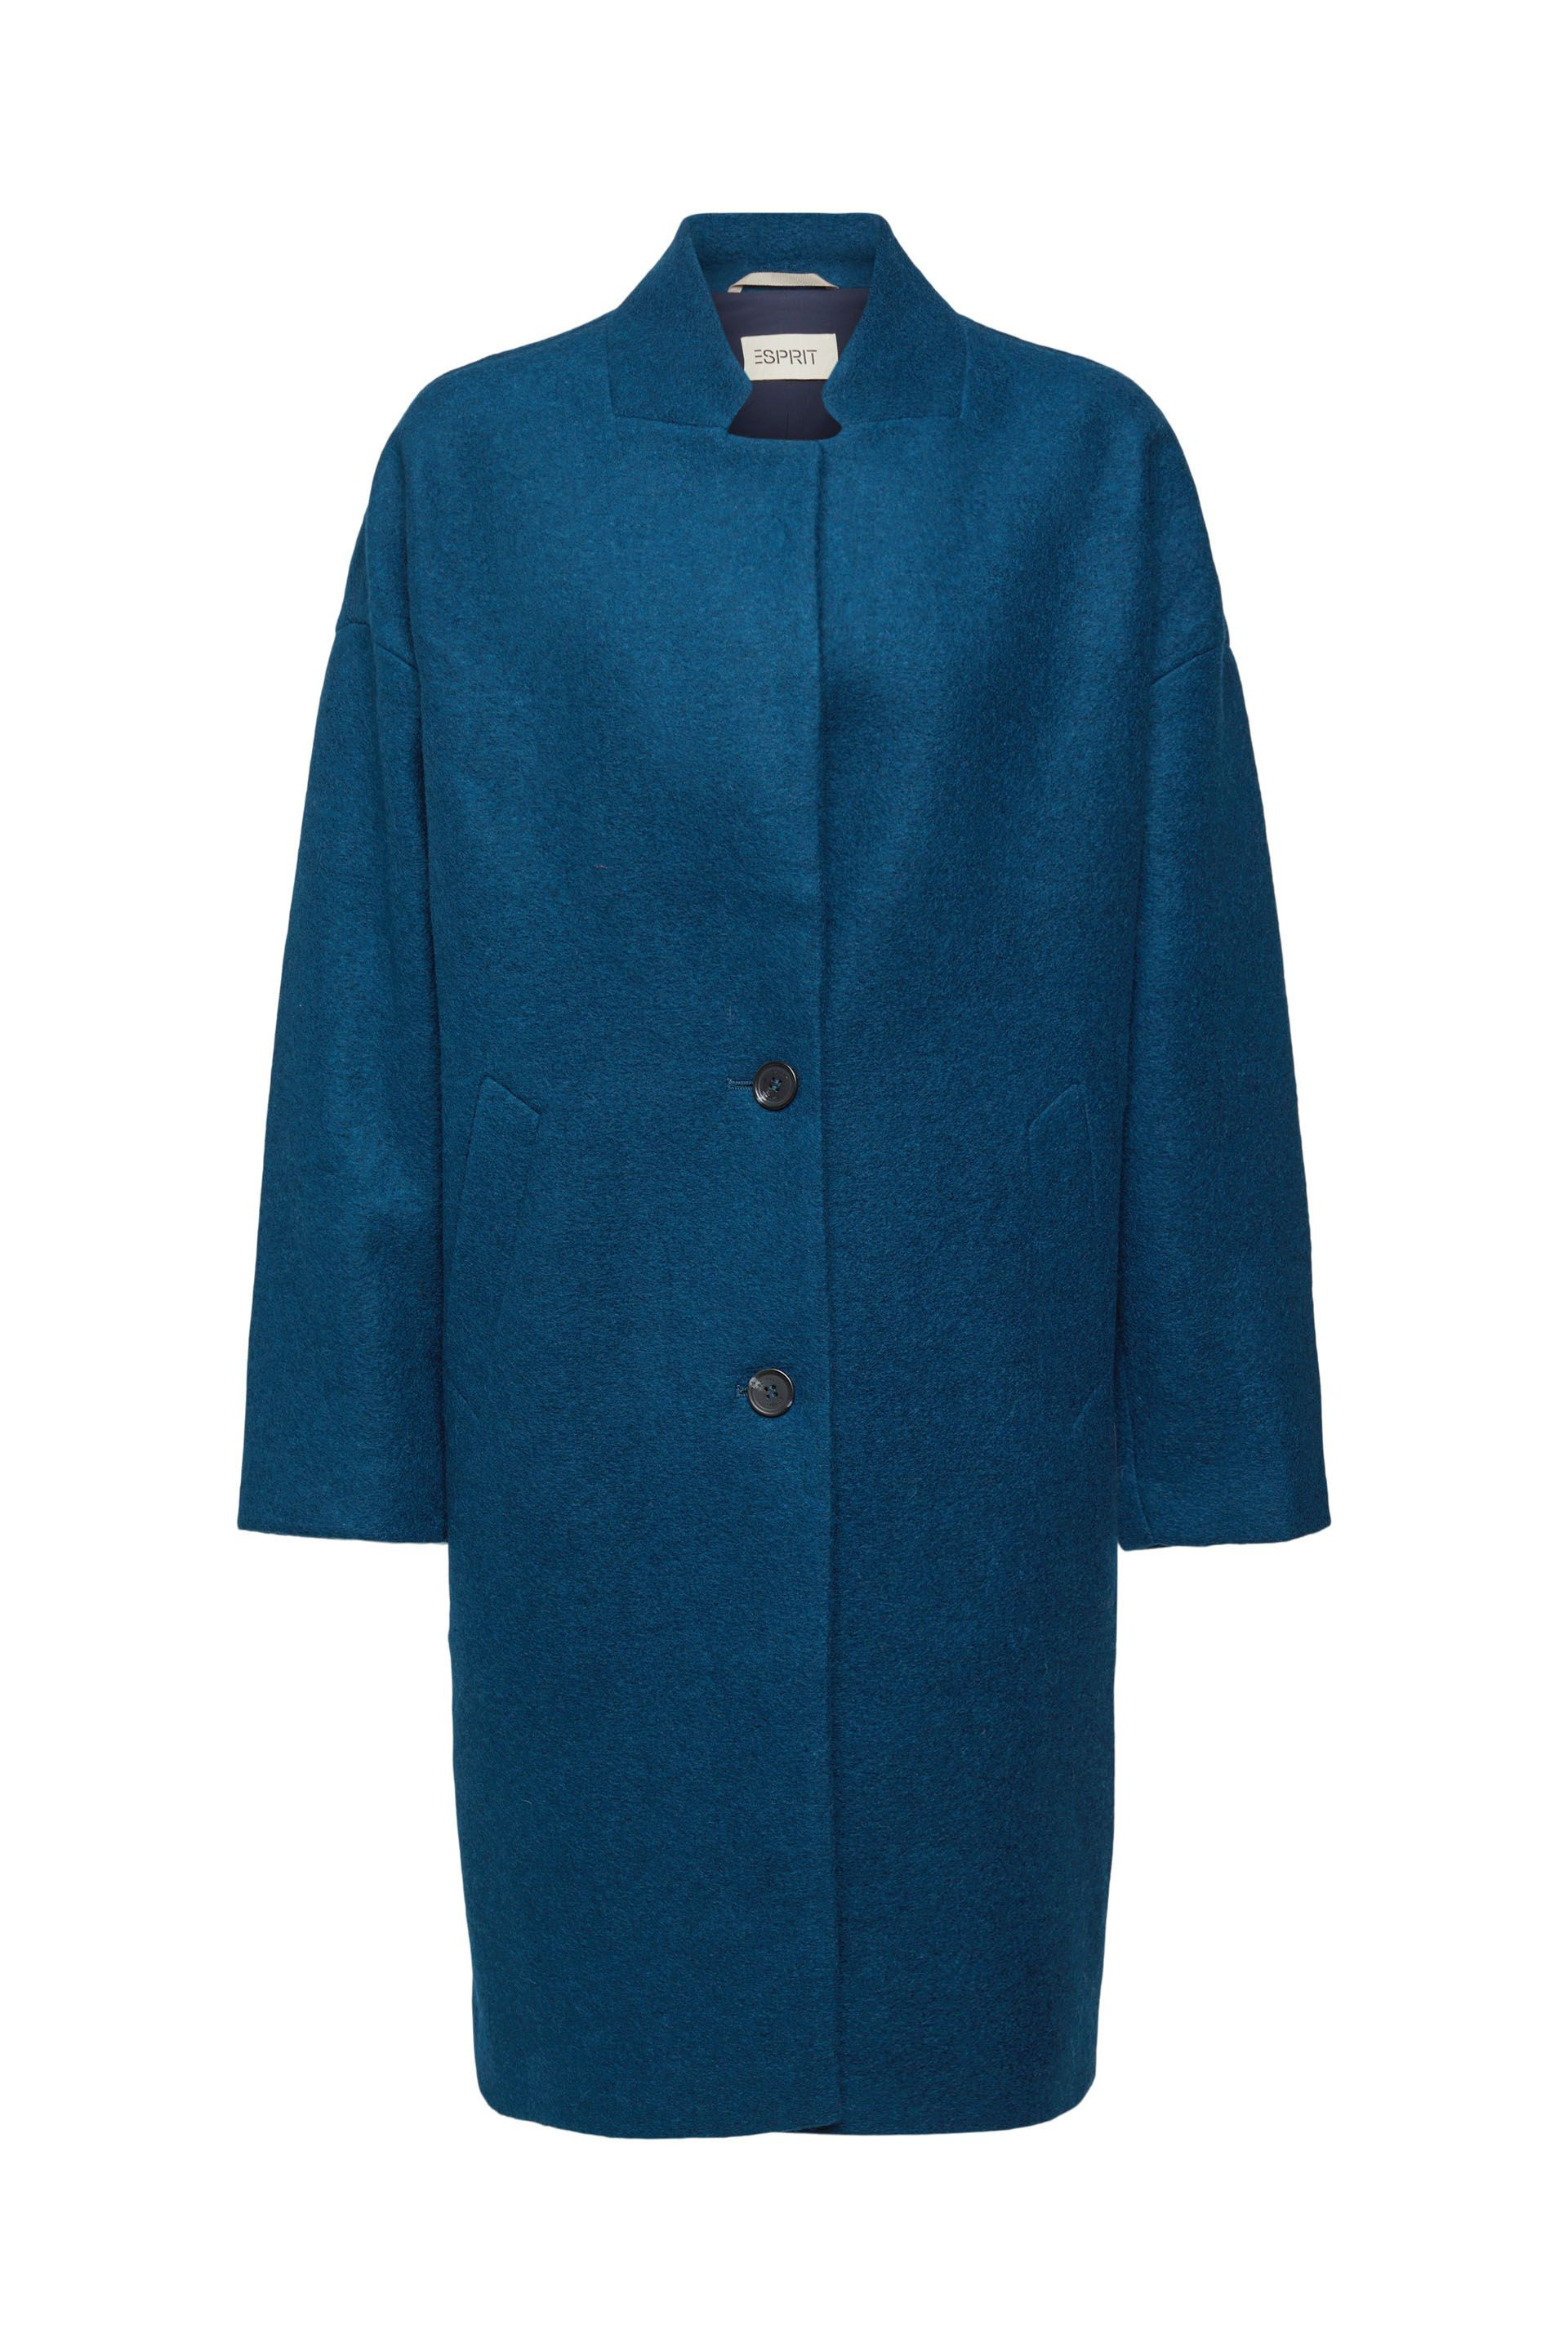 Cappotto in misto lana con collo revers, Blu, large image number 0